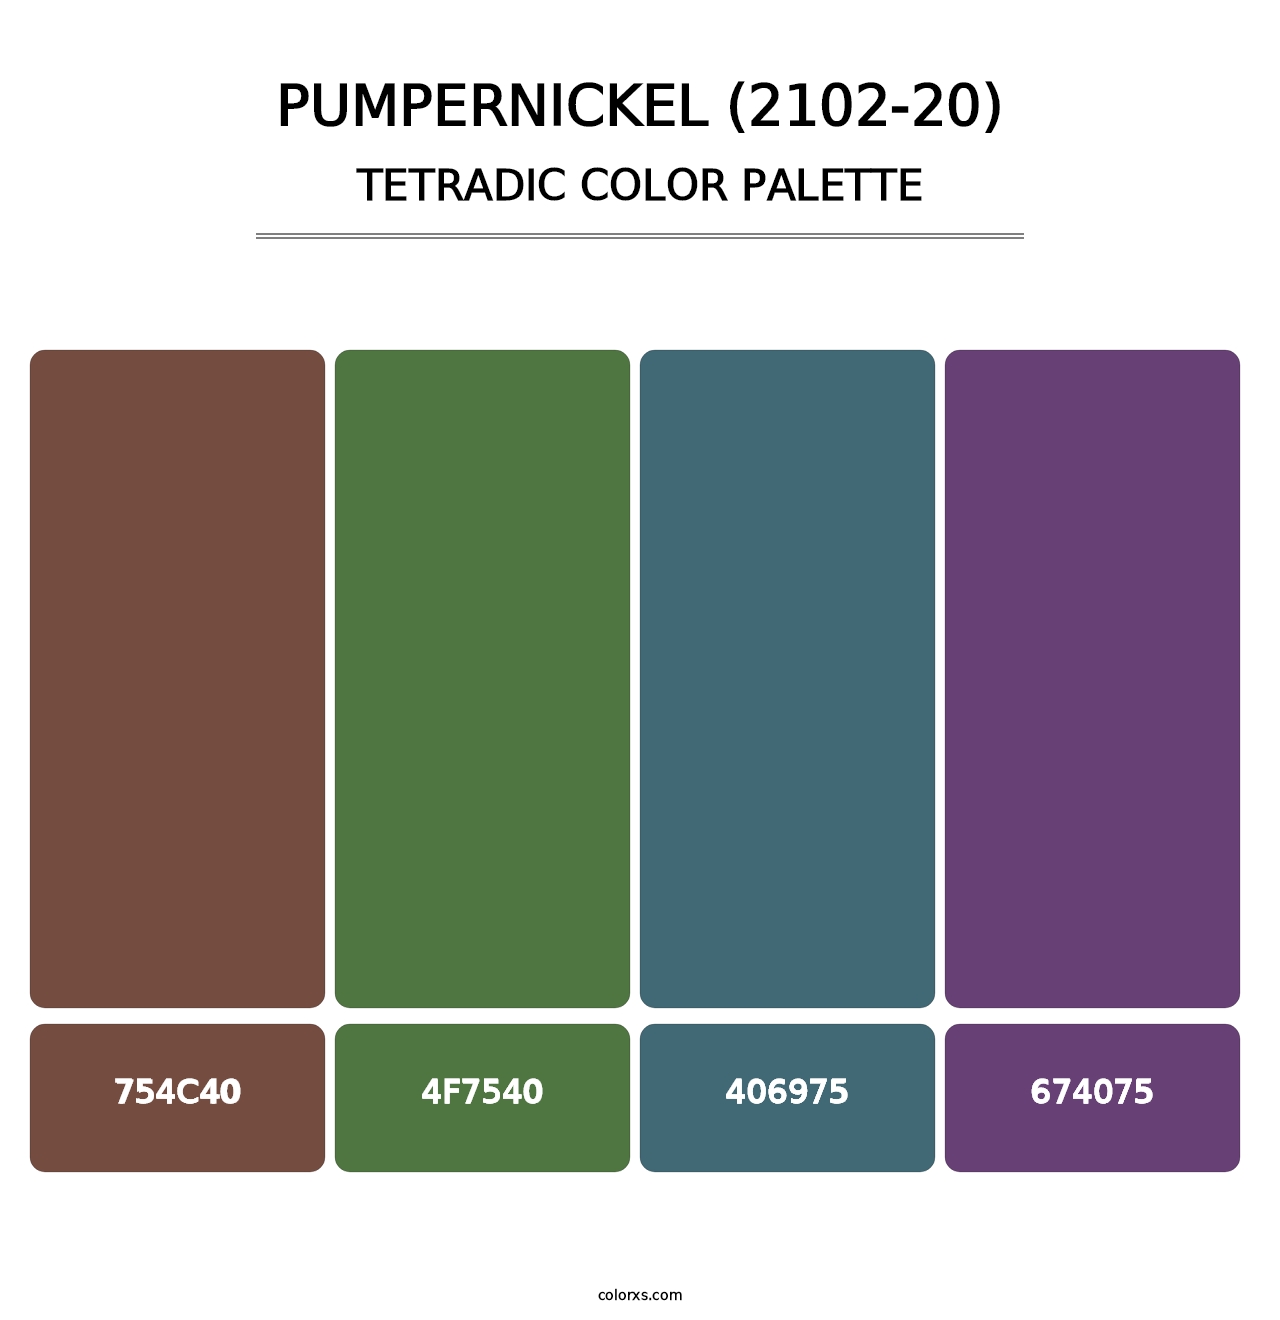 Pumpernickel (2102-20) - Tetradic Color Palette